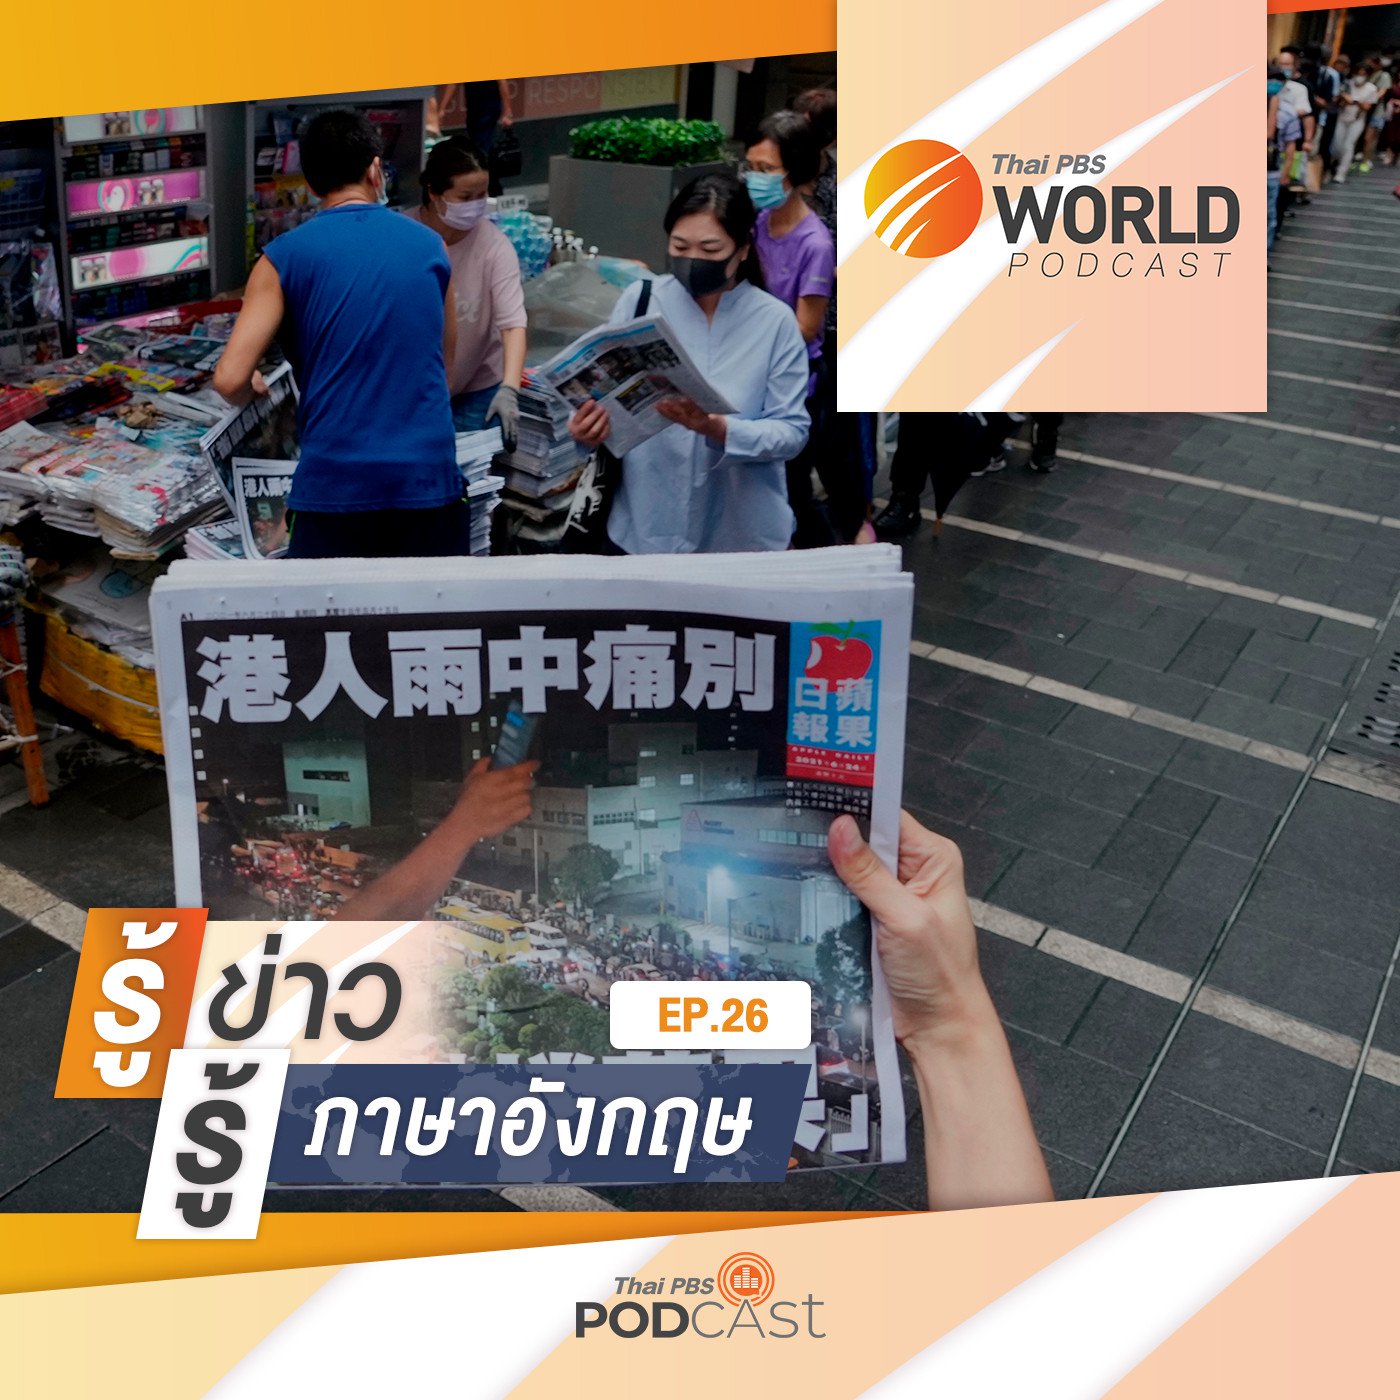 Thai PBS World Podcast - รู้ข่าว รู้ภาษาอังกฤษ EP. 26: ปิดฉาก ”แอปเปิลเดลี่” สื่อหนุนประช�